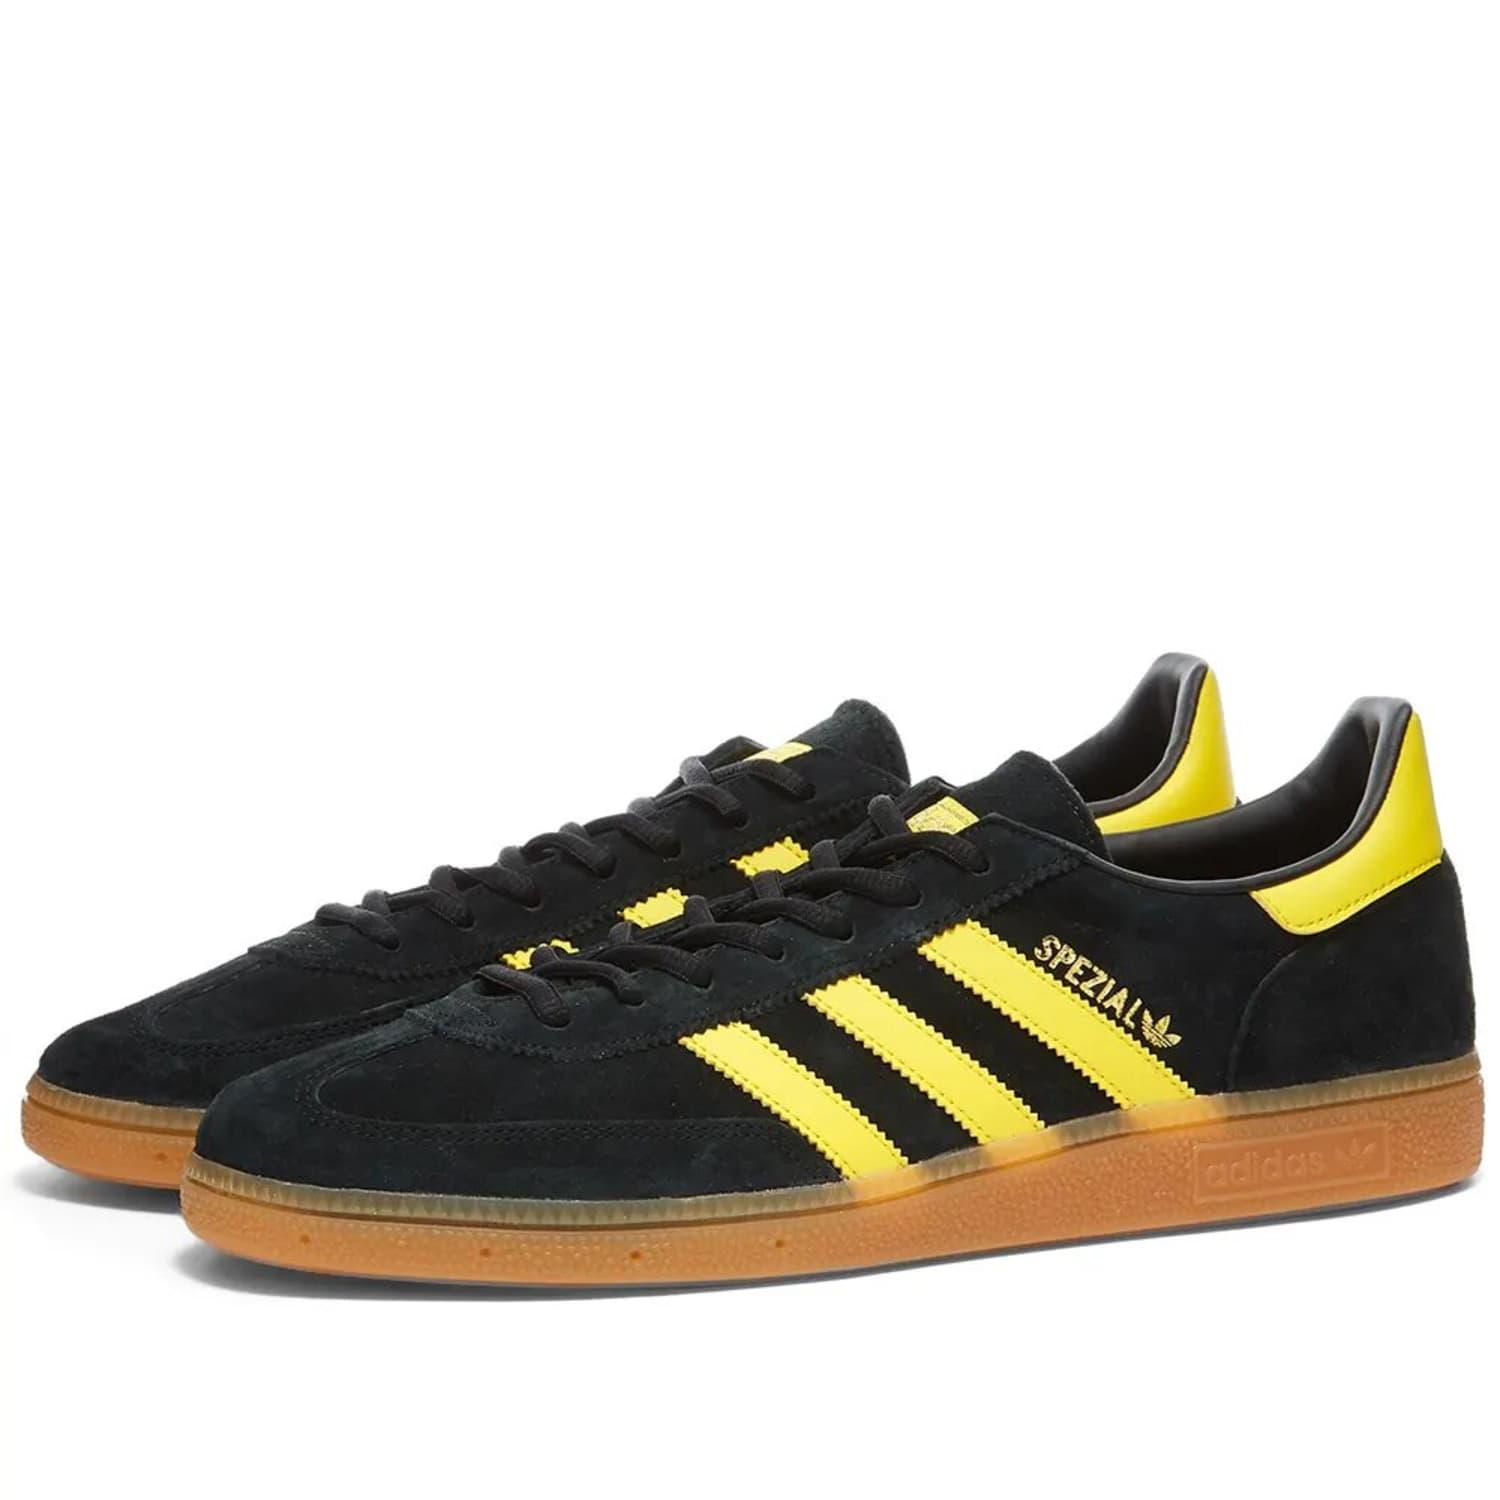 adidas Handball Spezial Black, Yellow Shoes Men | Lyst